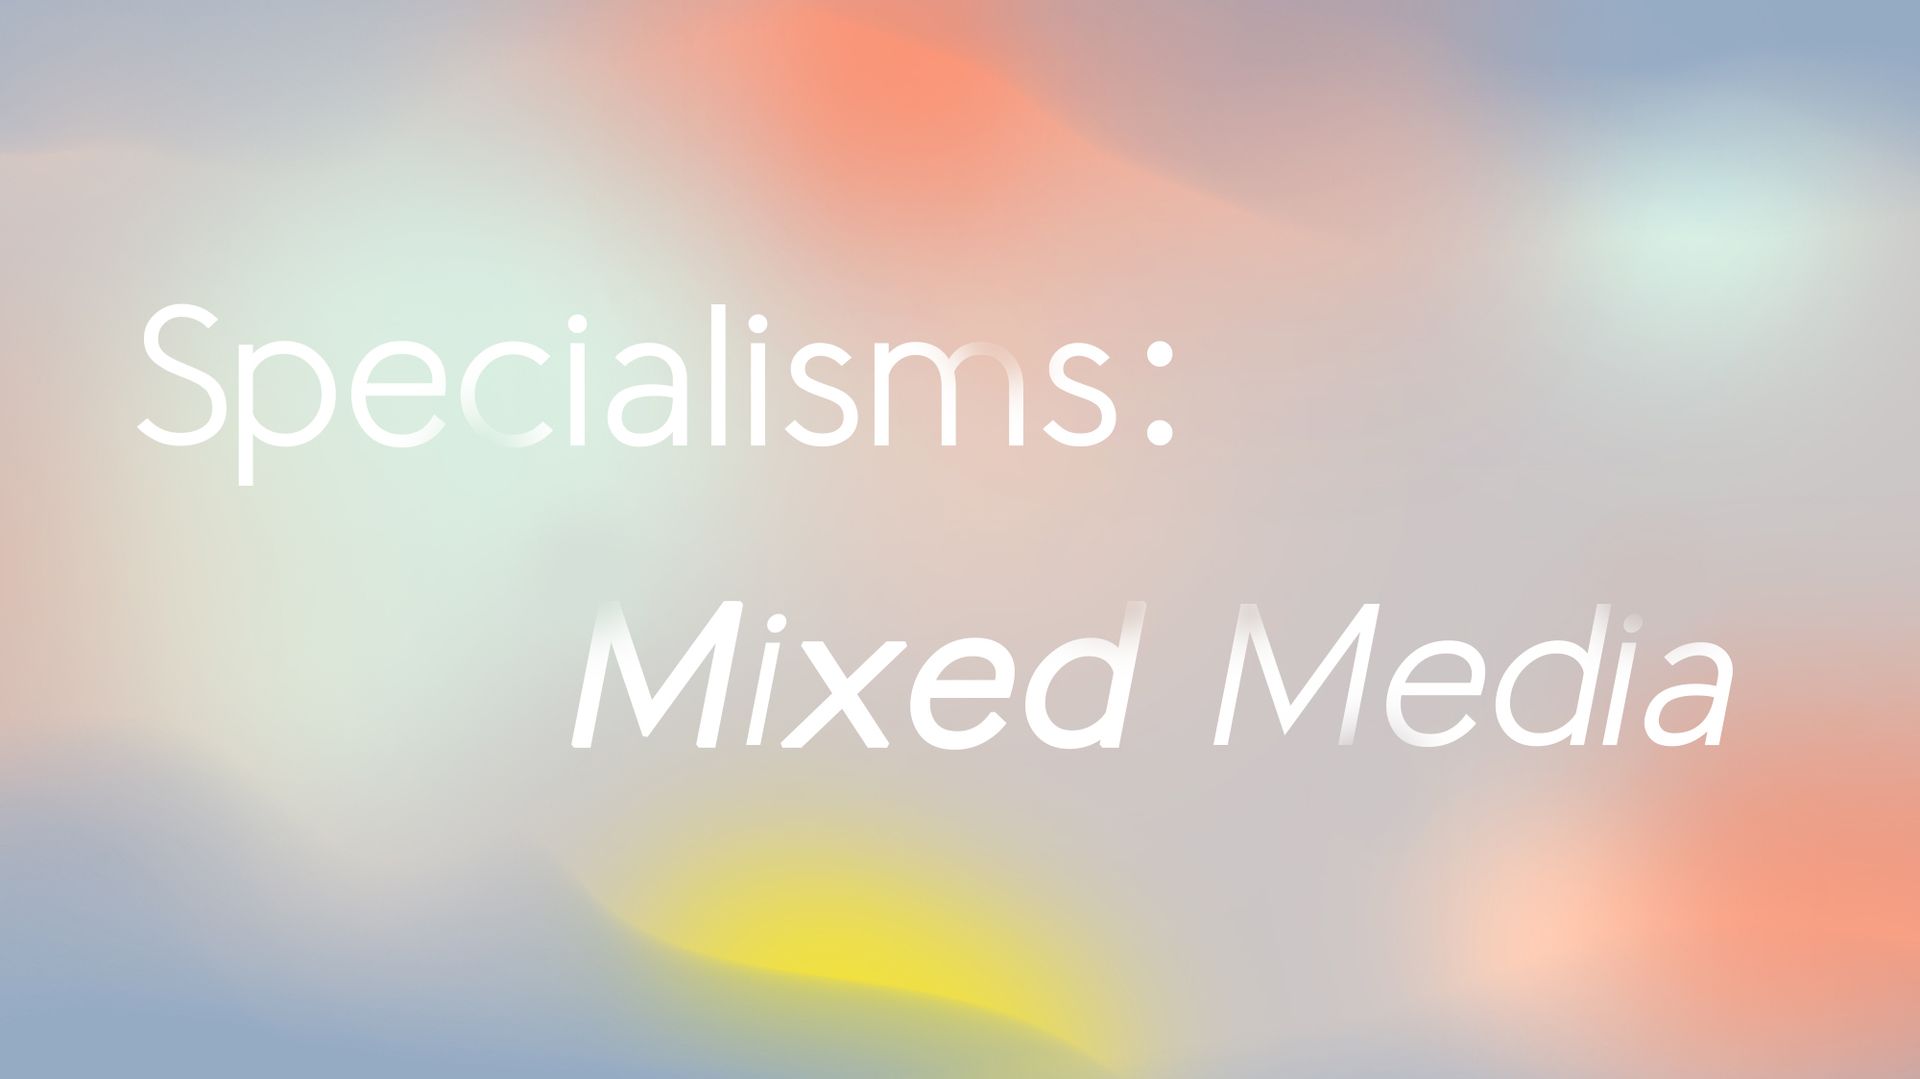 Specialism: Mixed Media